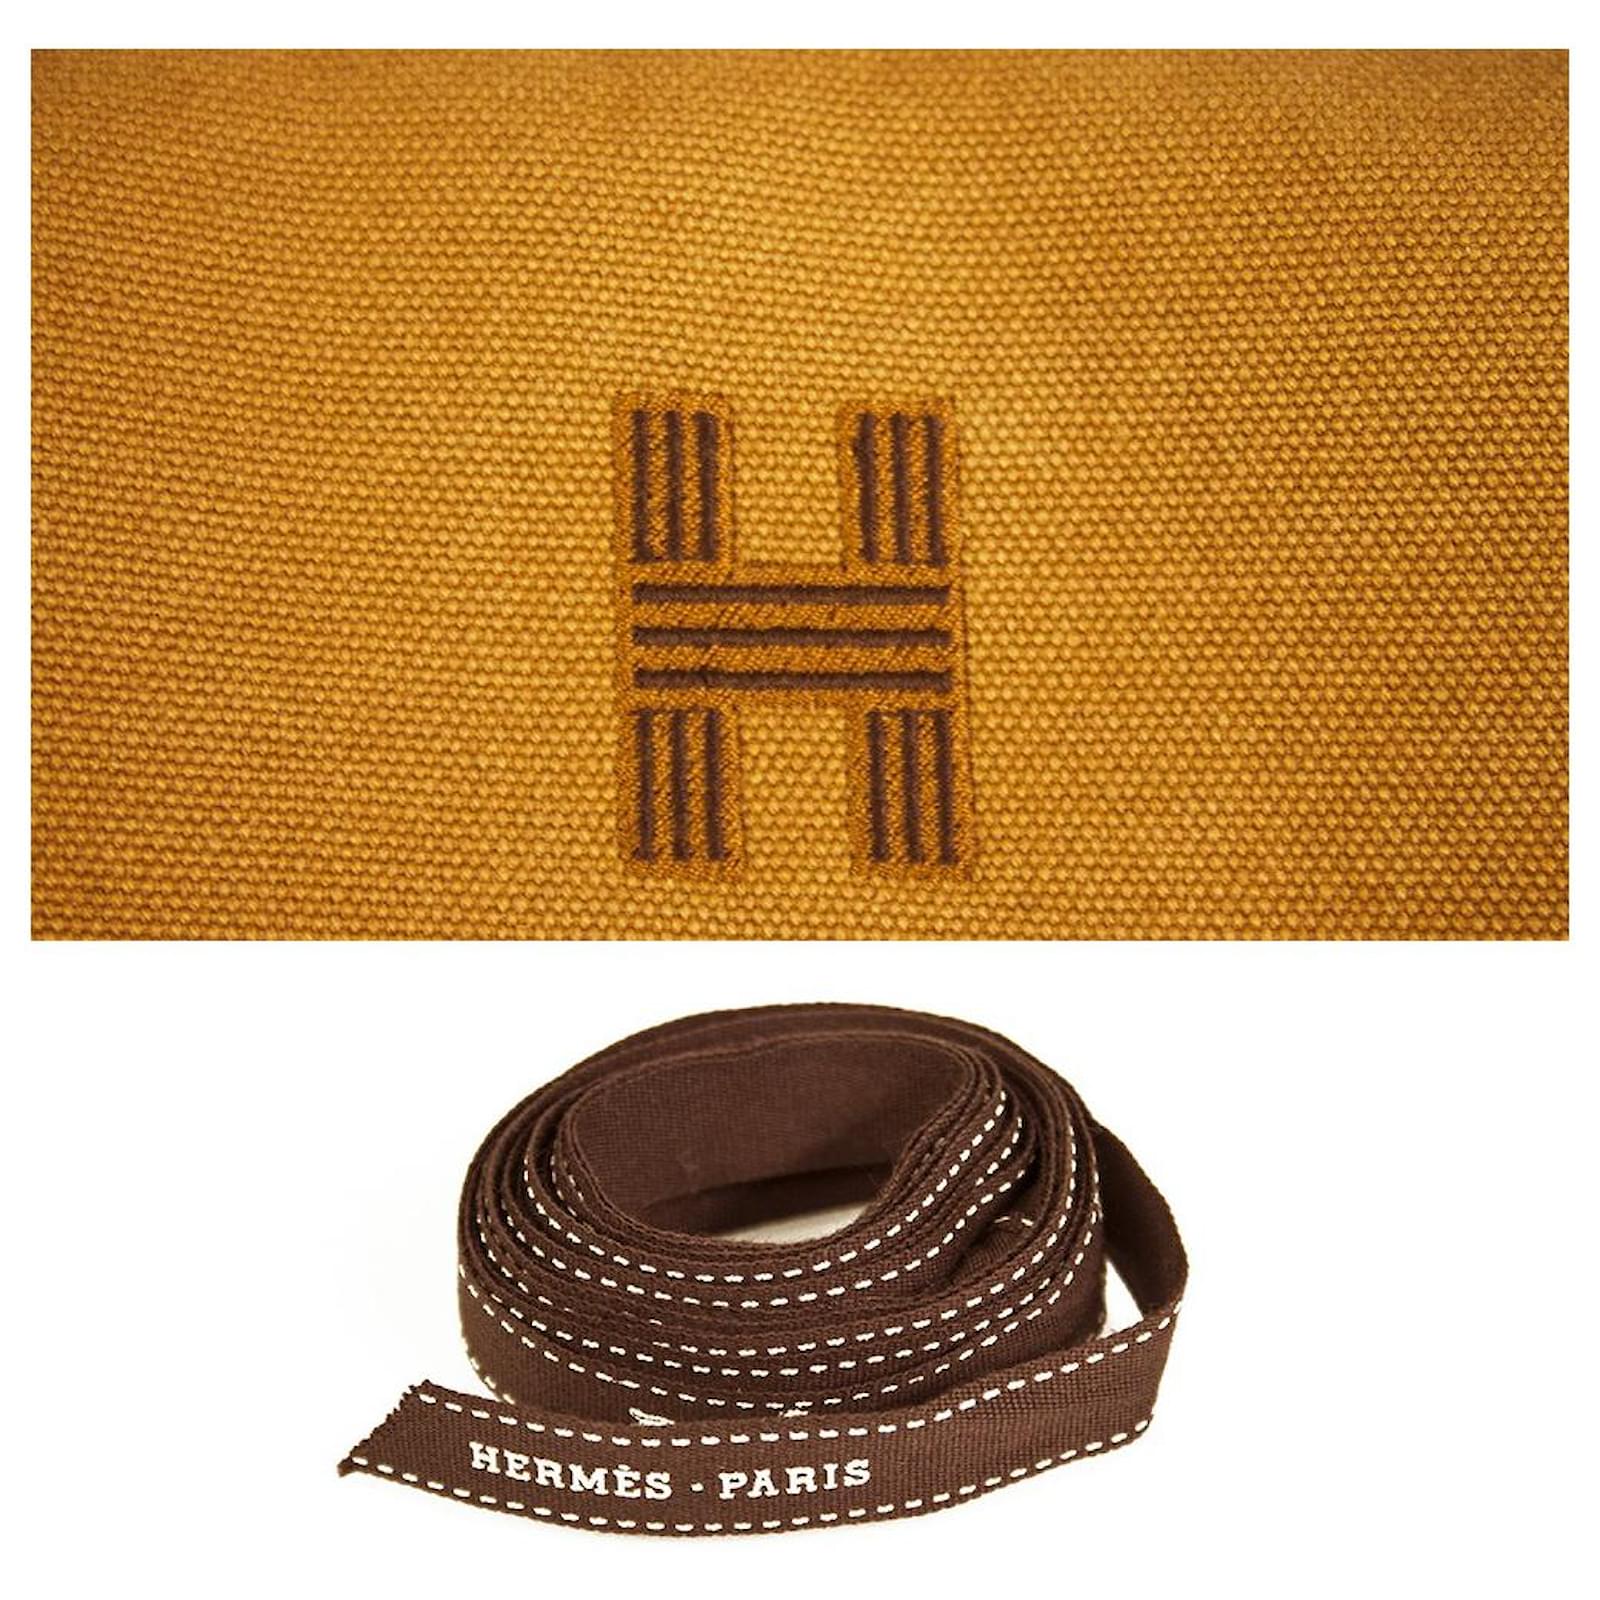 Hermès Bride-a-brac Toiletry Case Toile Pm Cosmetic Bag in brown